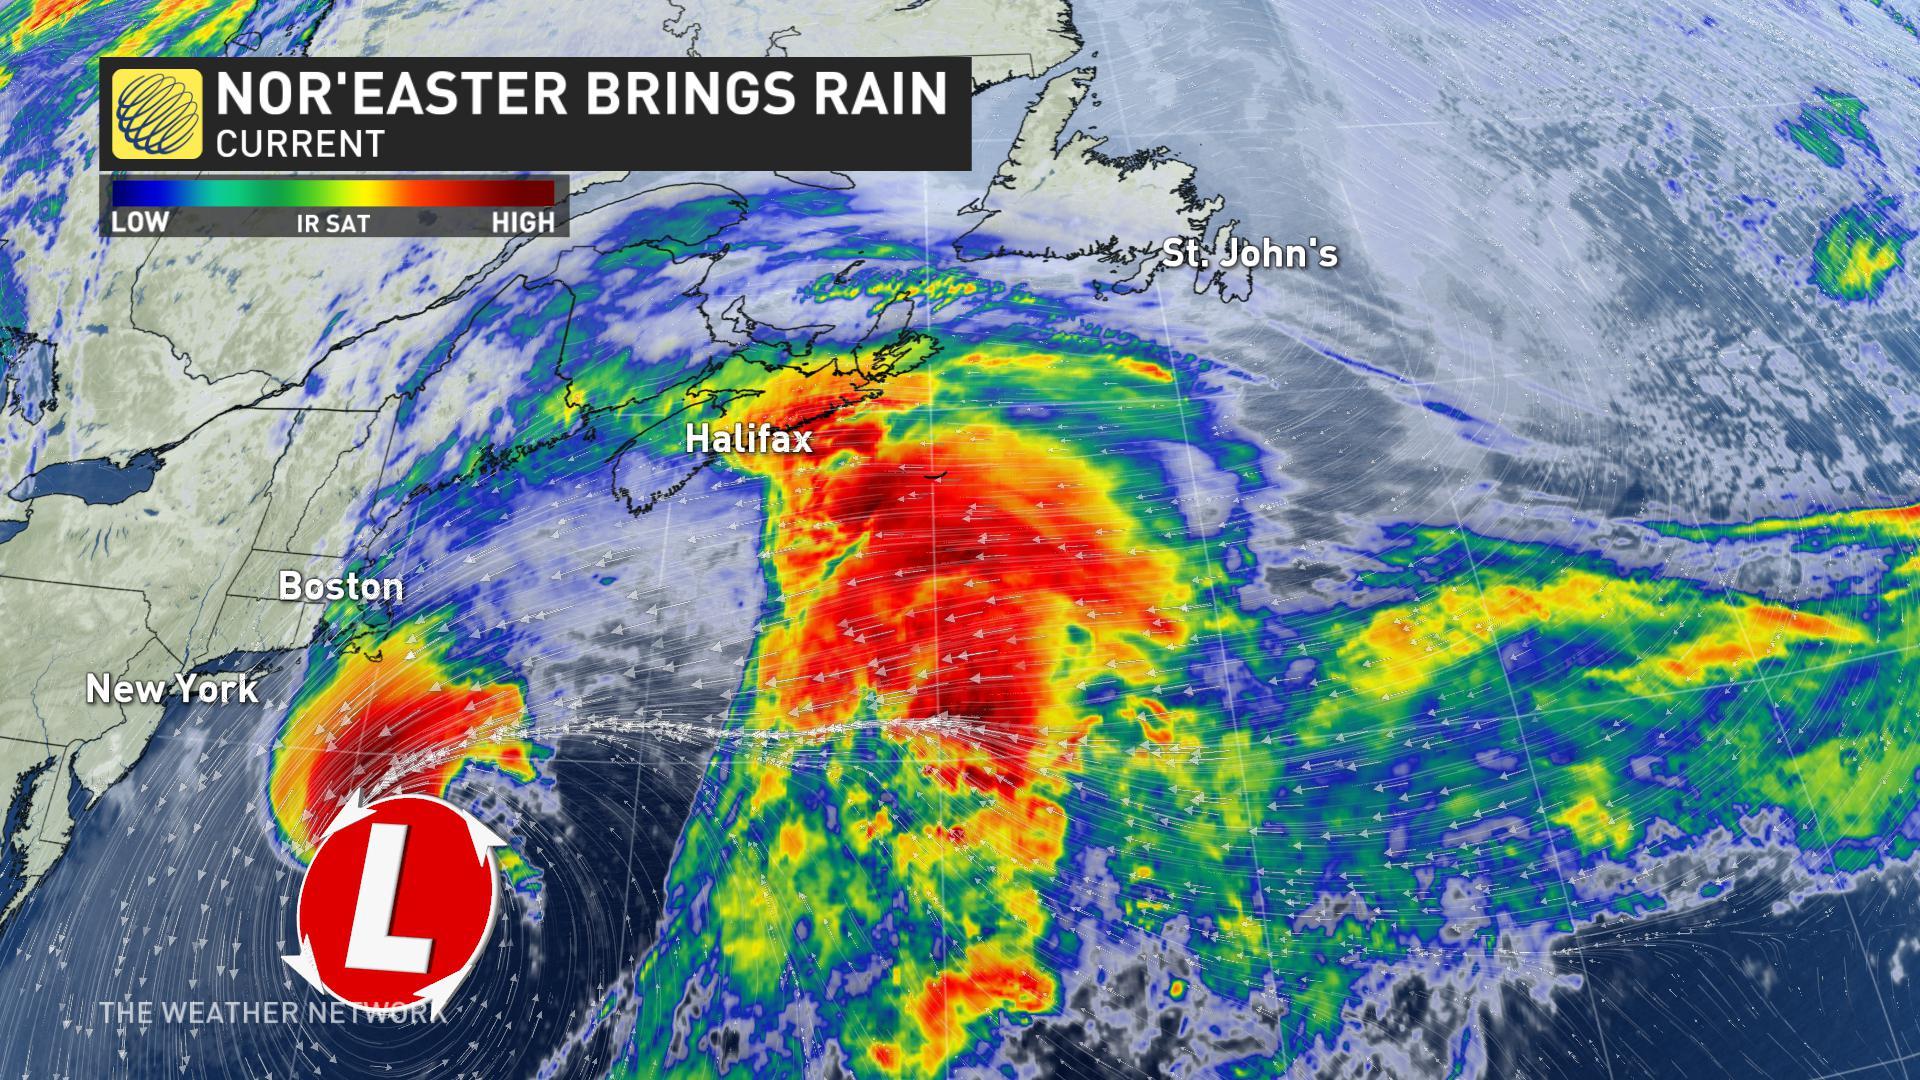 Nor’easter becomes Subtropical Storm Melissa off New England coast